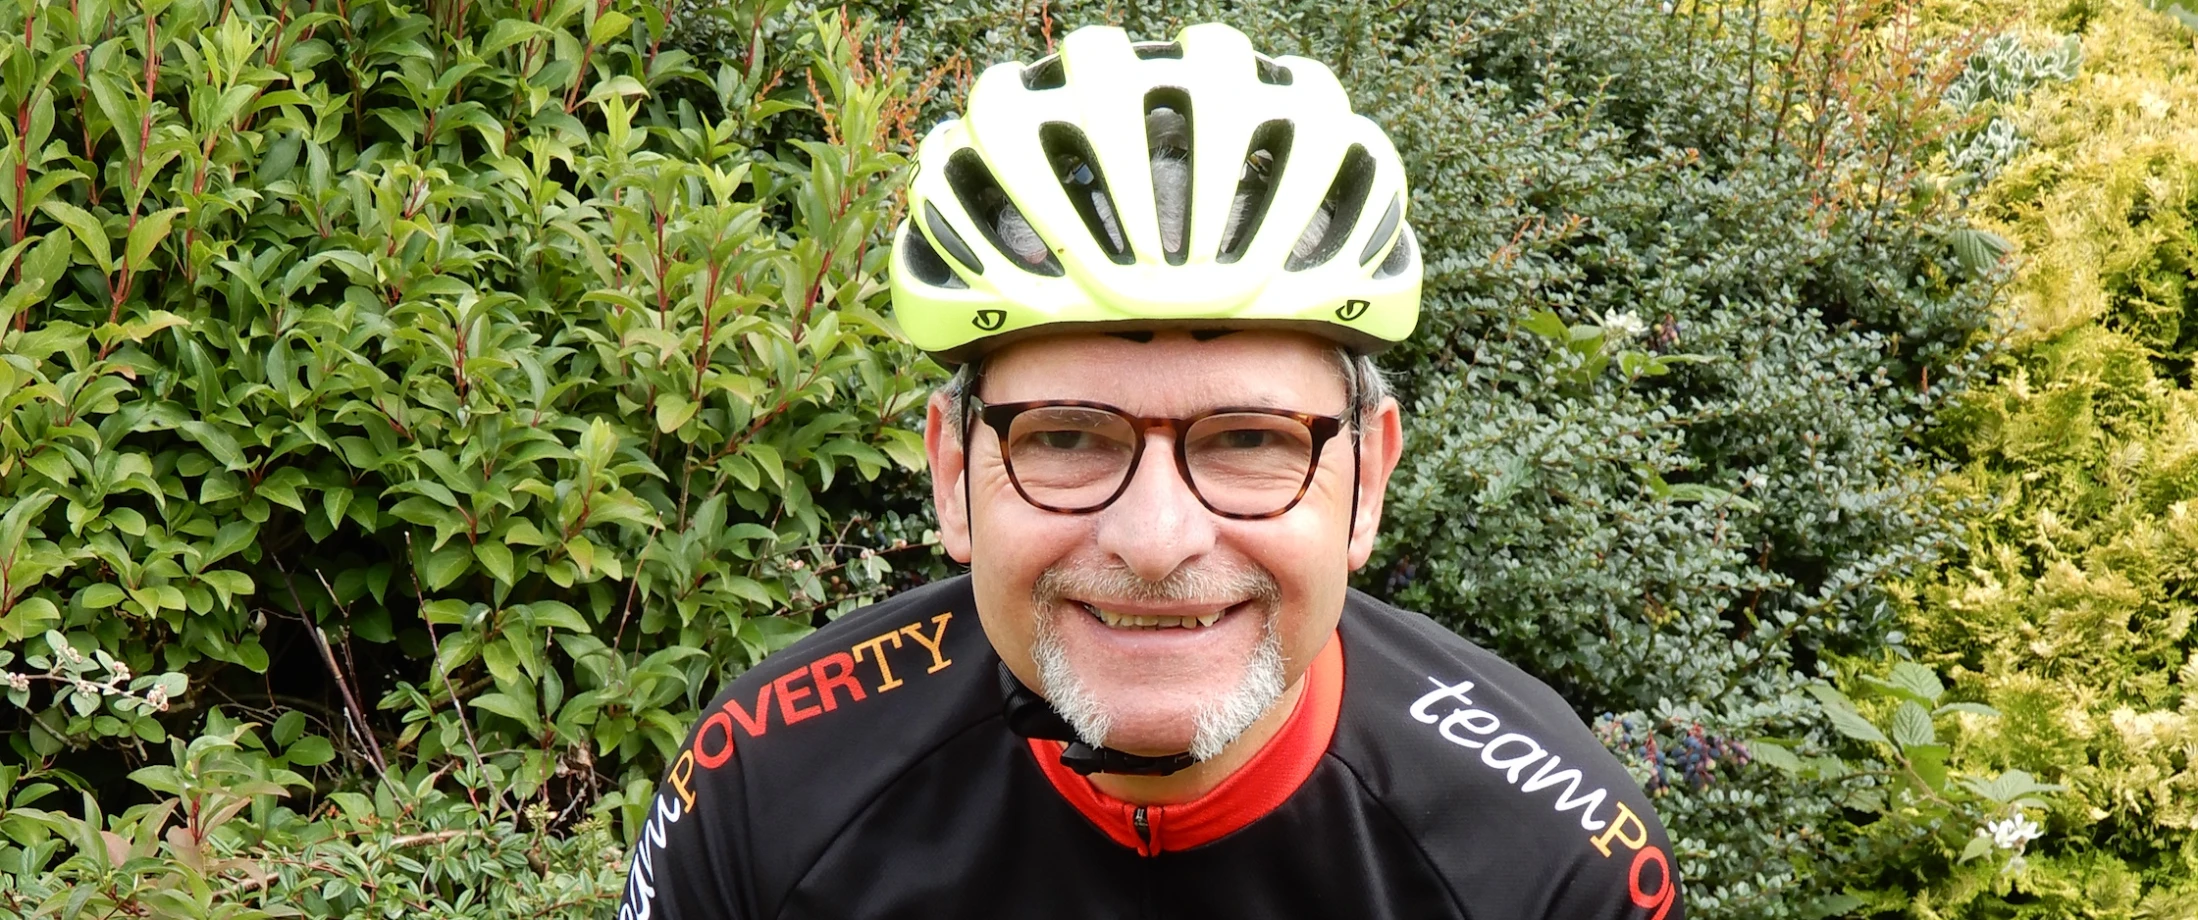 Rector raises £750 with a virtual Tour de France